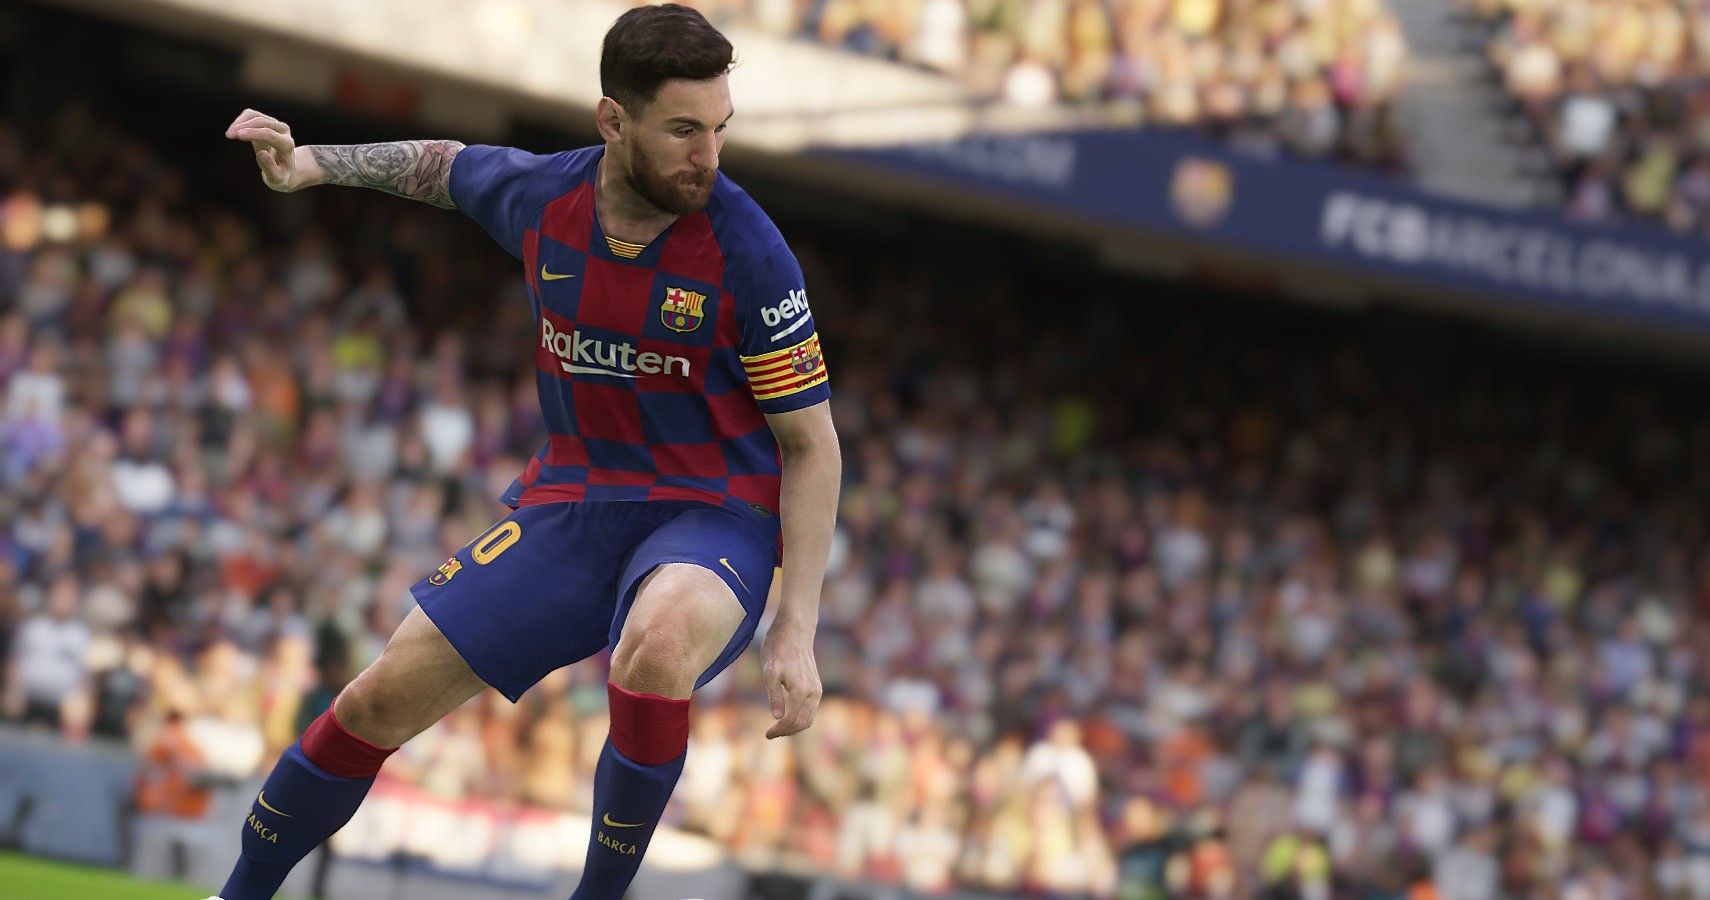 eFootball PES 2022 Official Trailer - NEXT GEN, Unreal Engine 